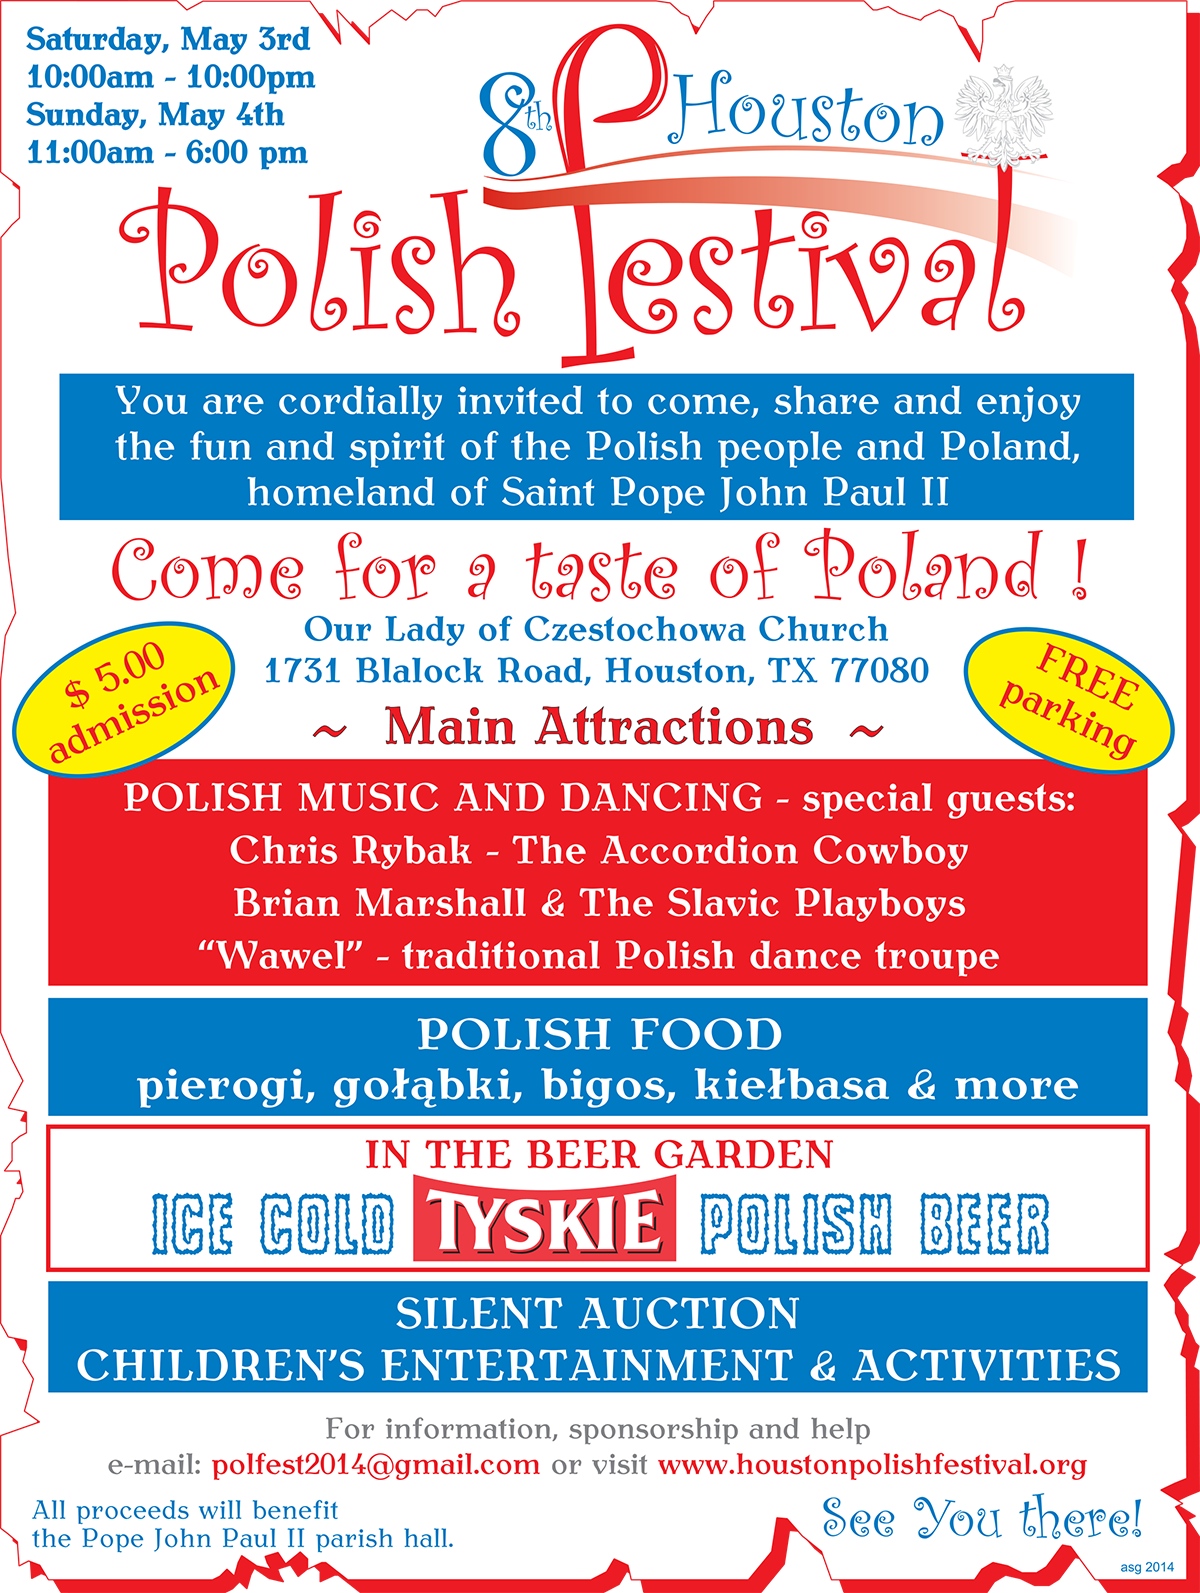 7th Annual Houston Polish Festival